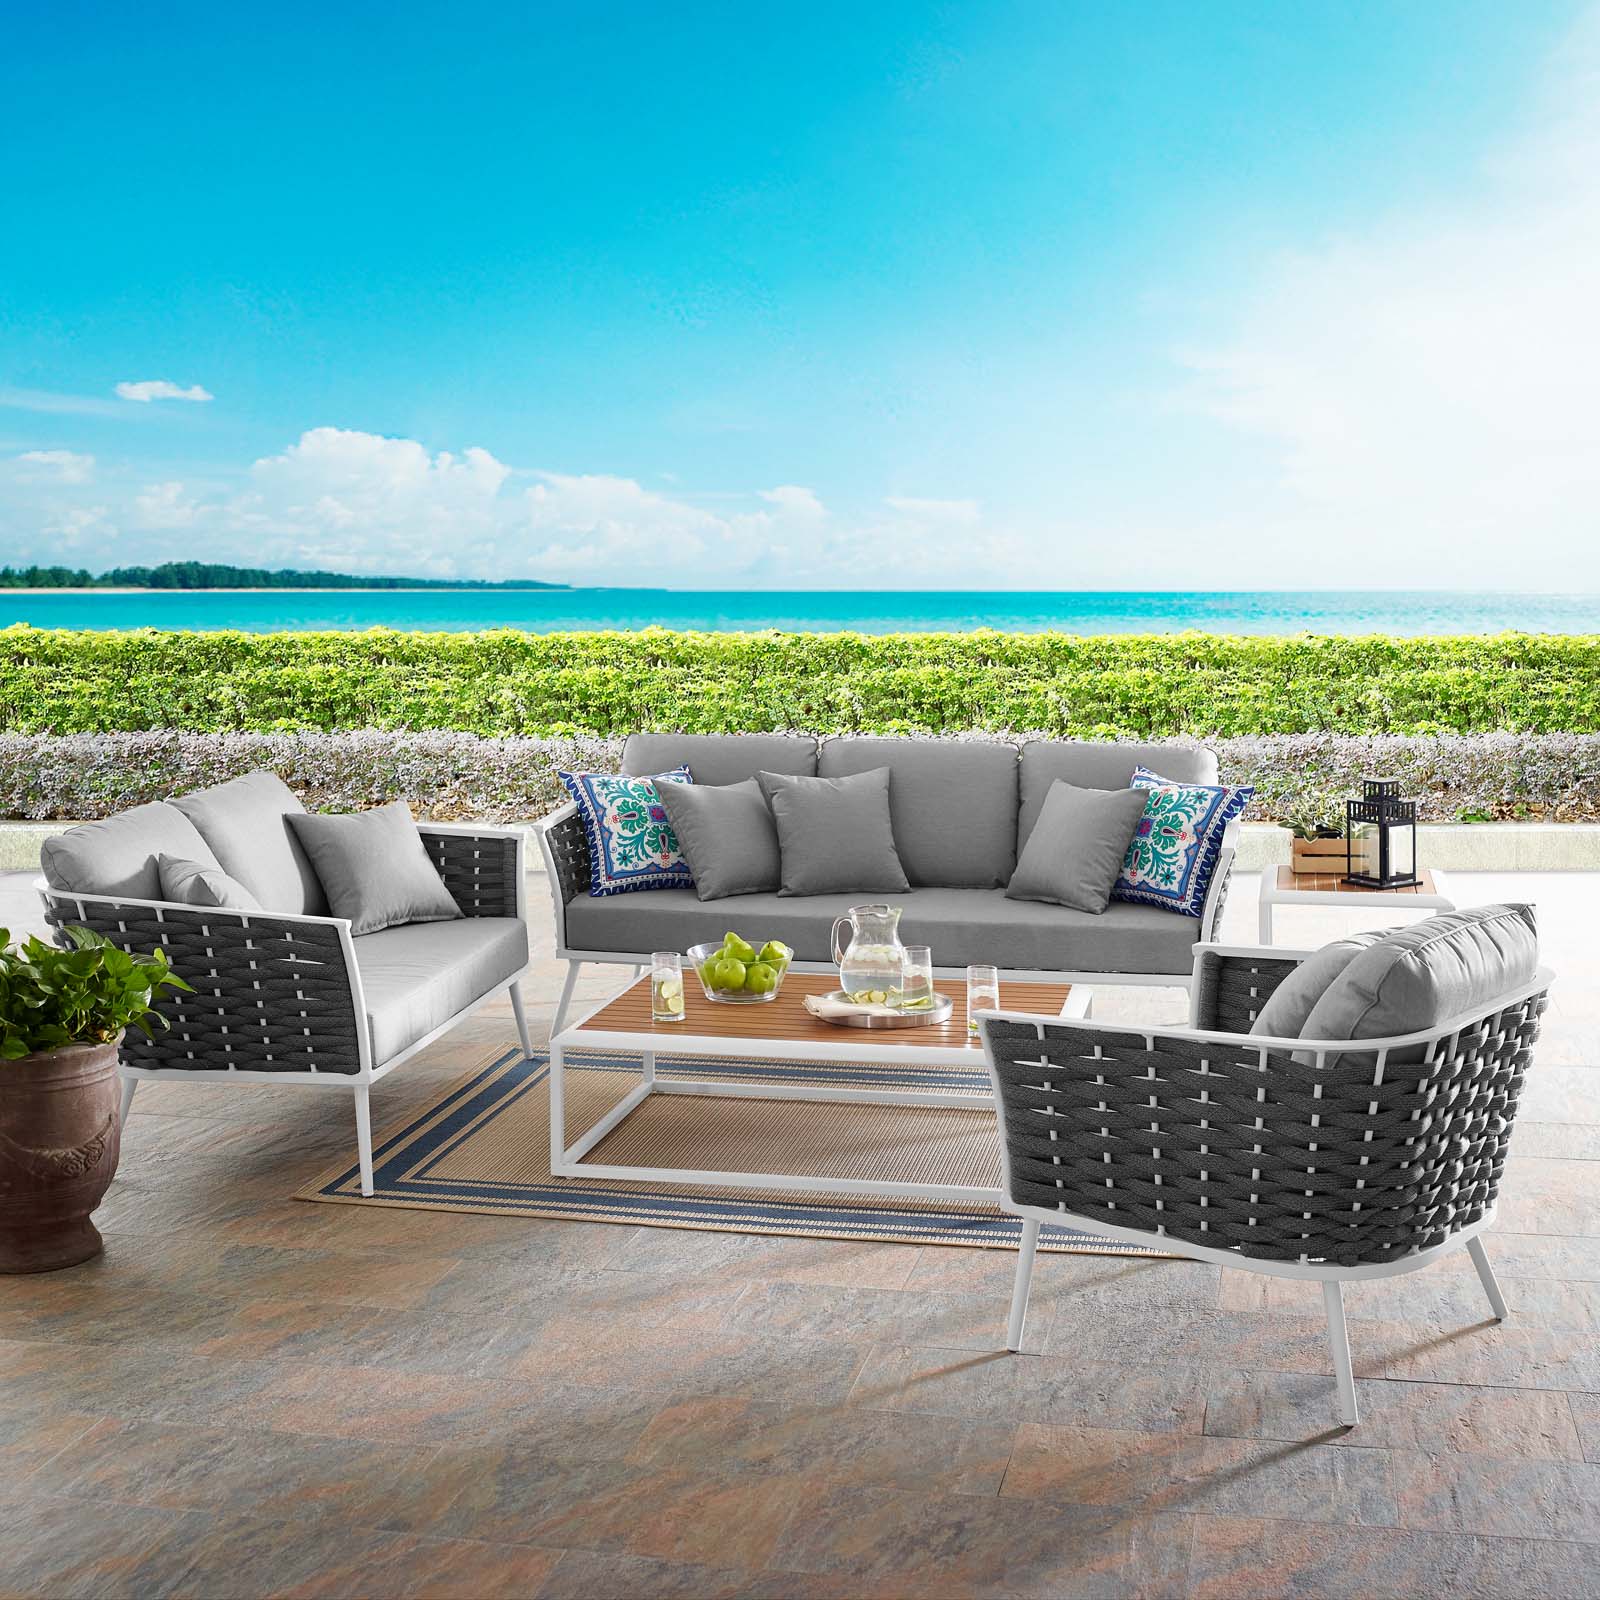 Modern Contemporary Urban Outdoor Patio Balcony Garden Furniture Lounge Chair, Sofa and Table Set, Fabric Aluminium, White Grey Gray - image 2 of 8